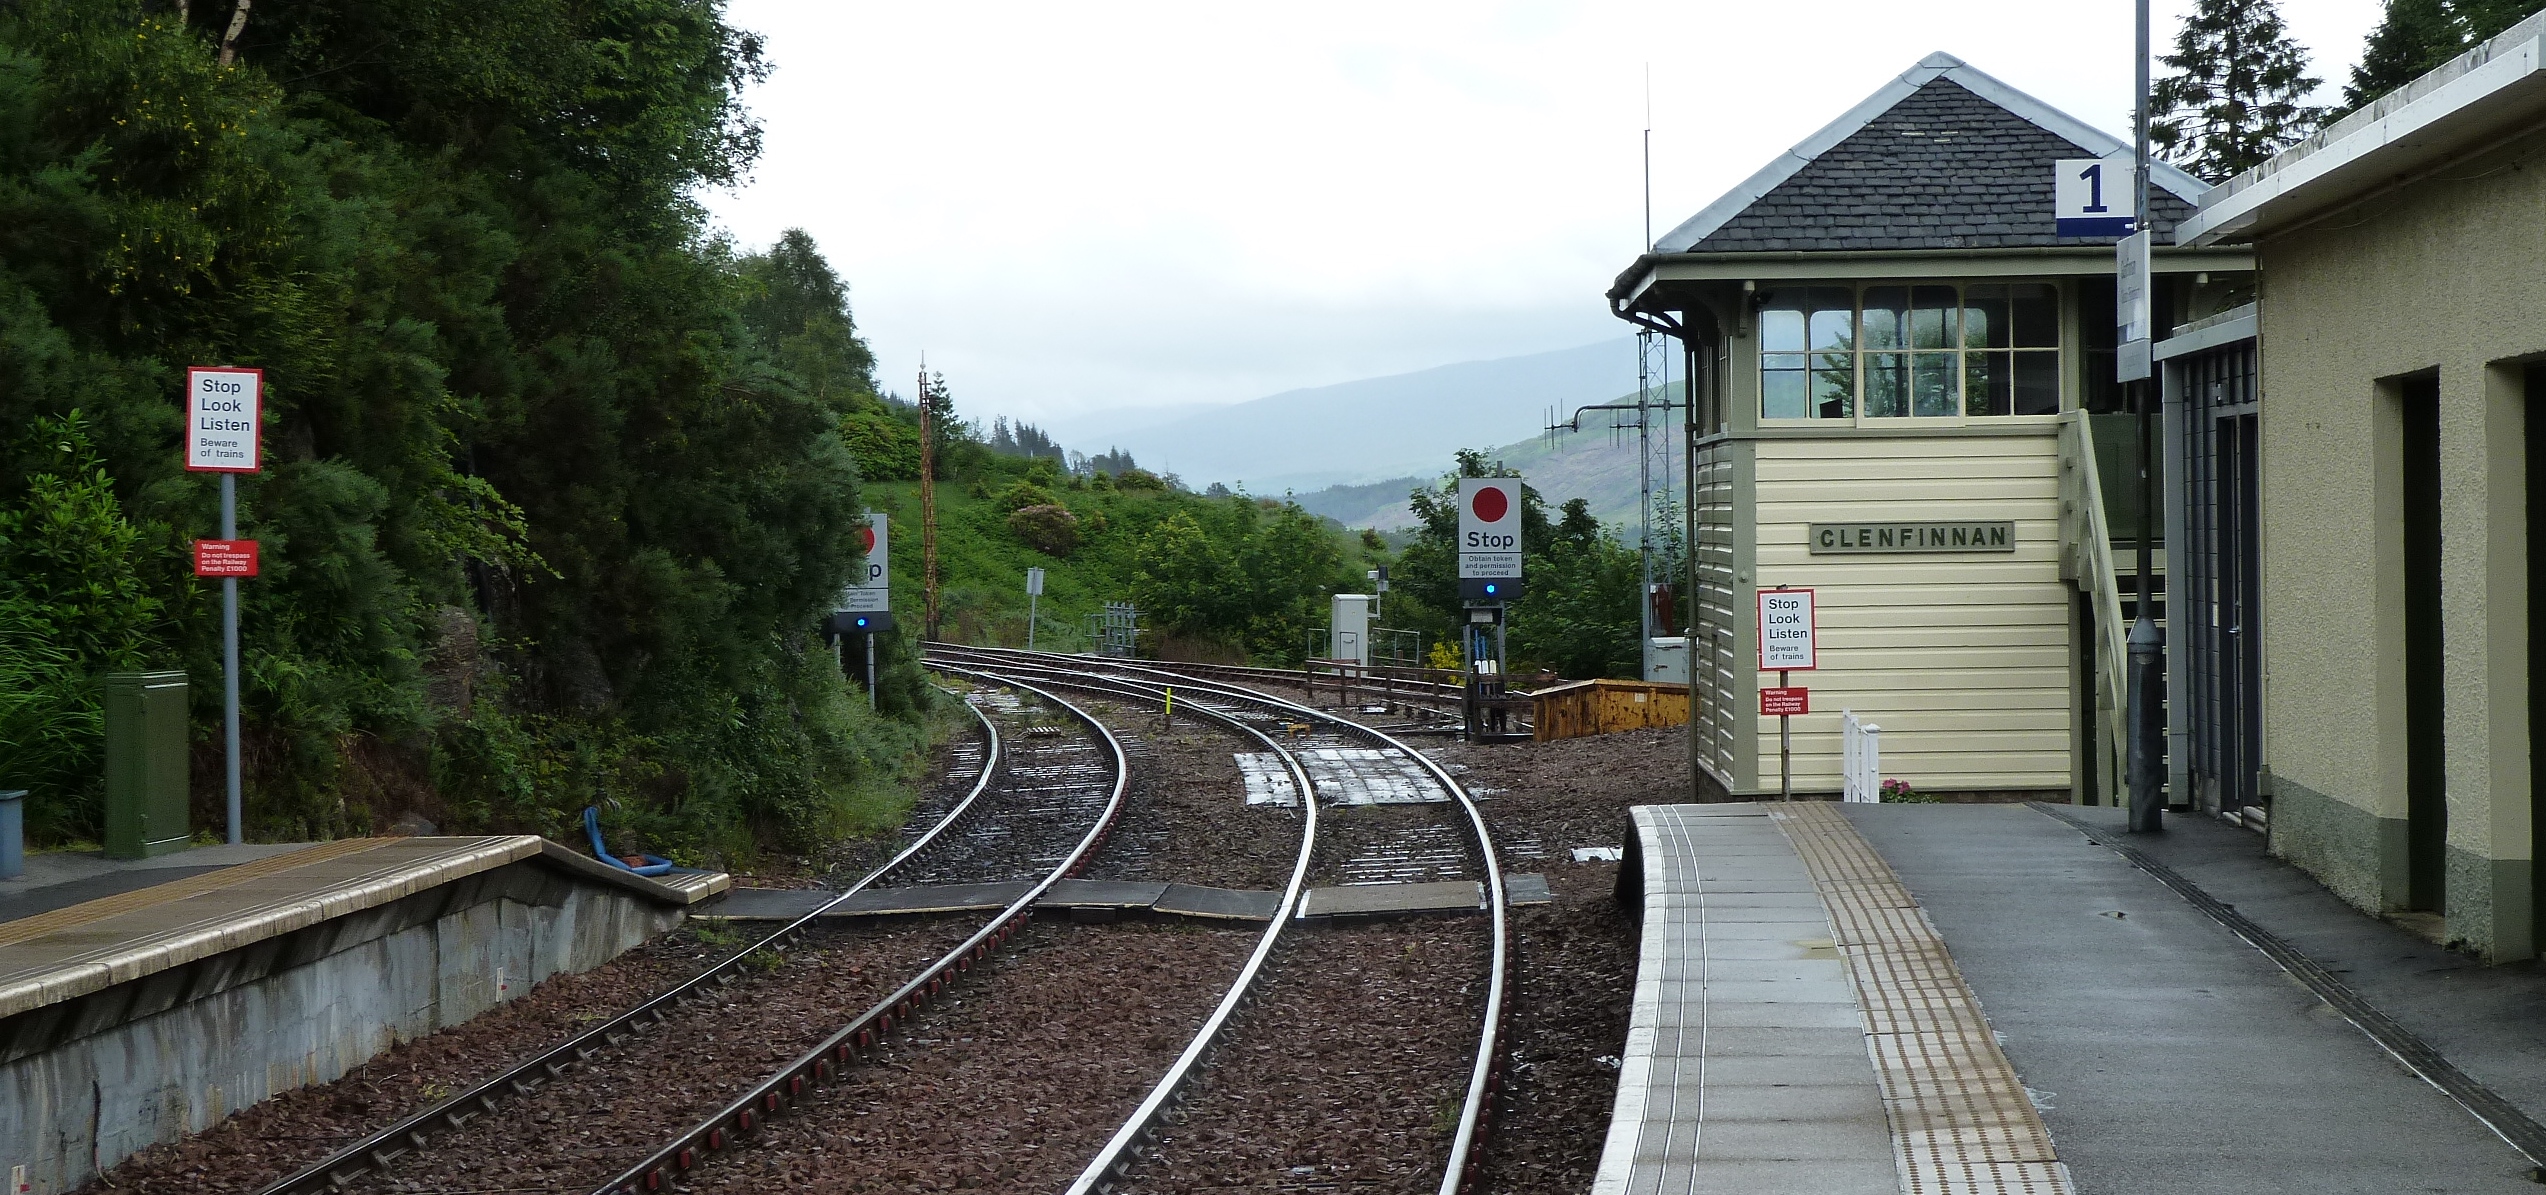 04 Glenfinnan station.jpg